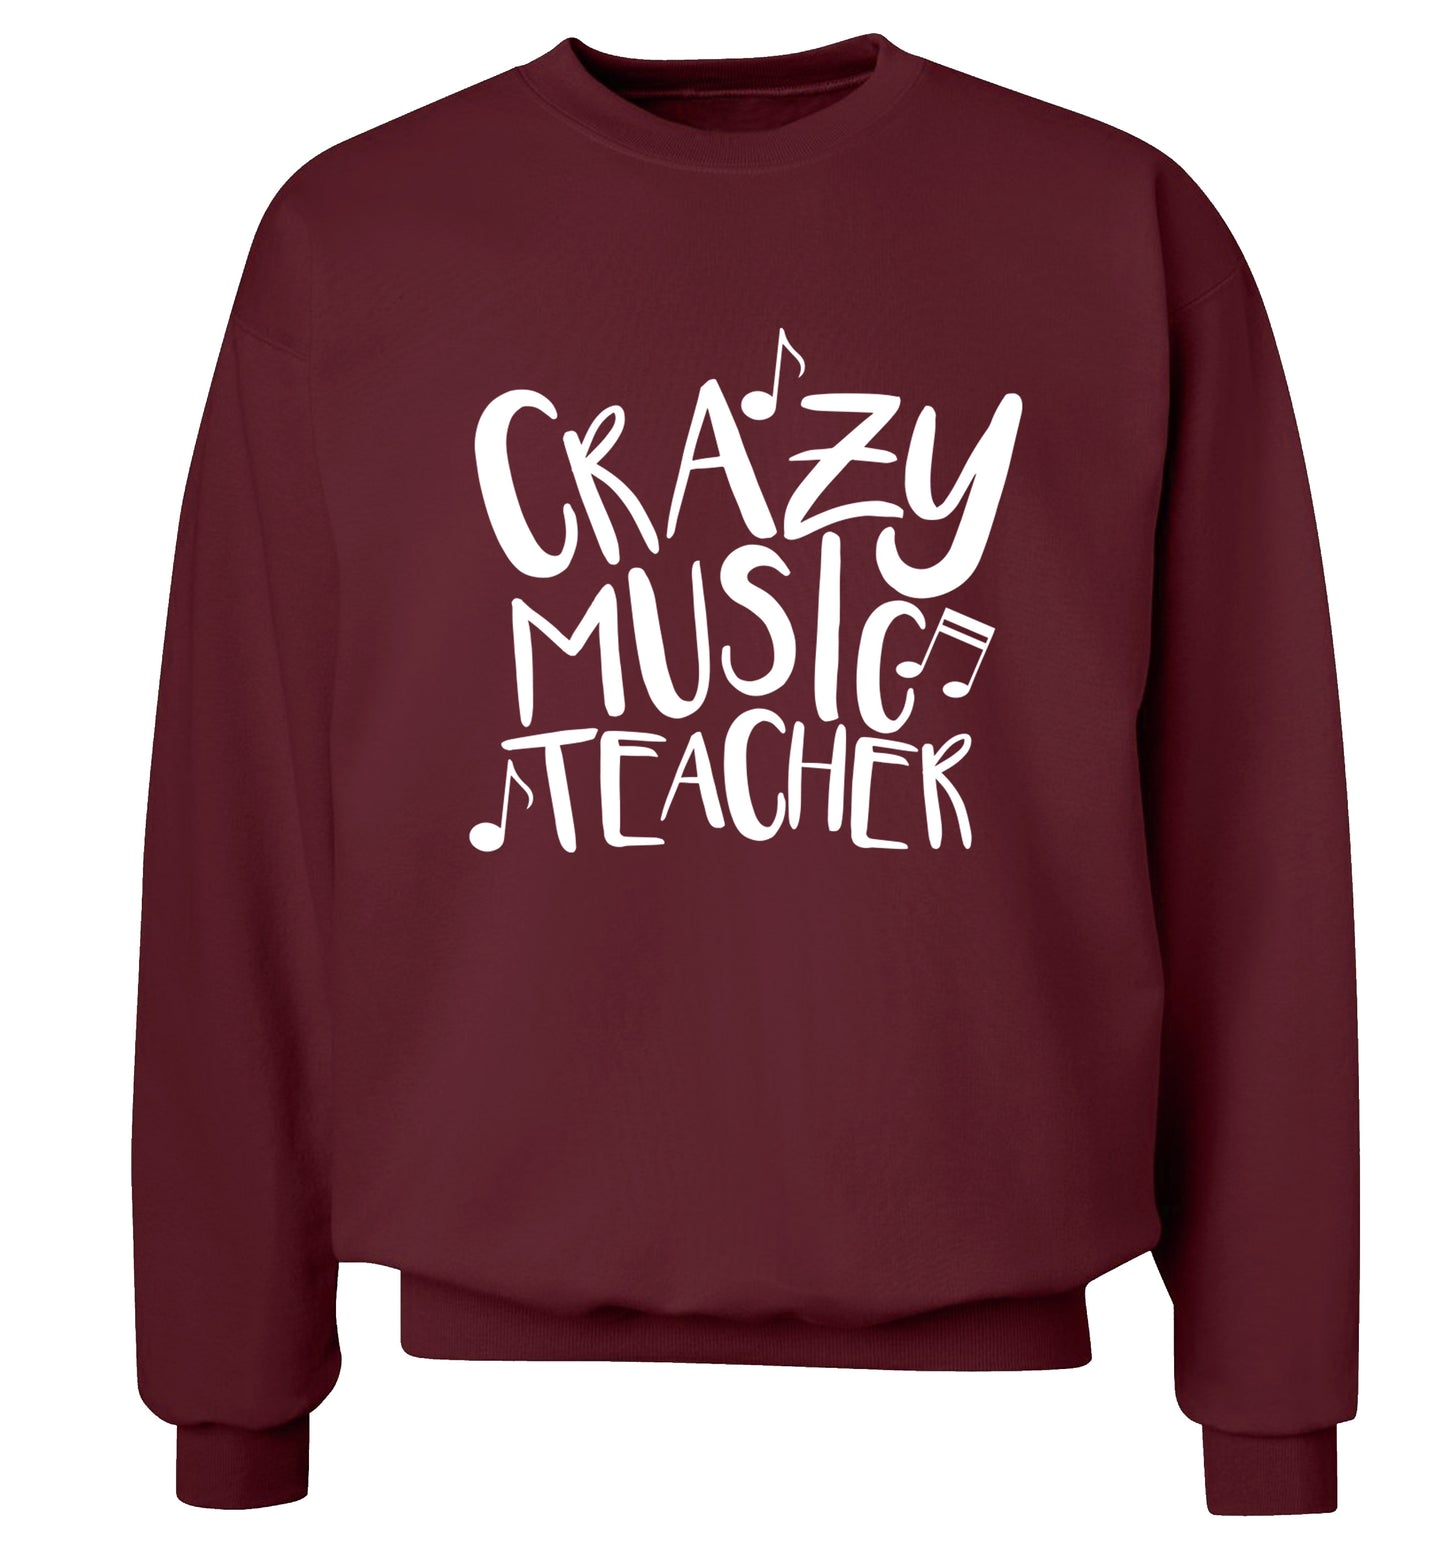 Crazy music teacher Adult's unisex maroon Sweater 2XL